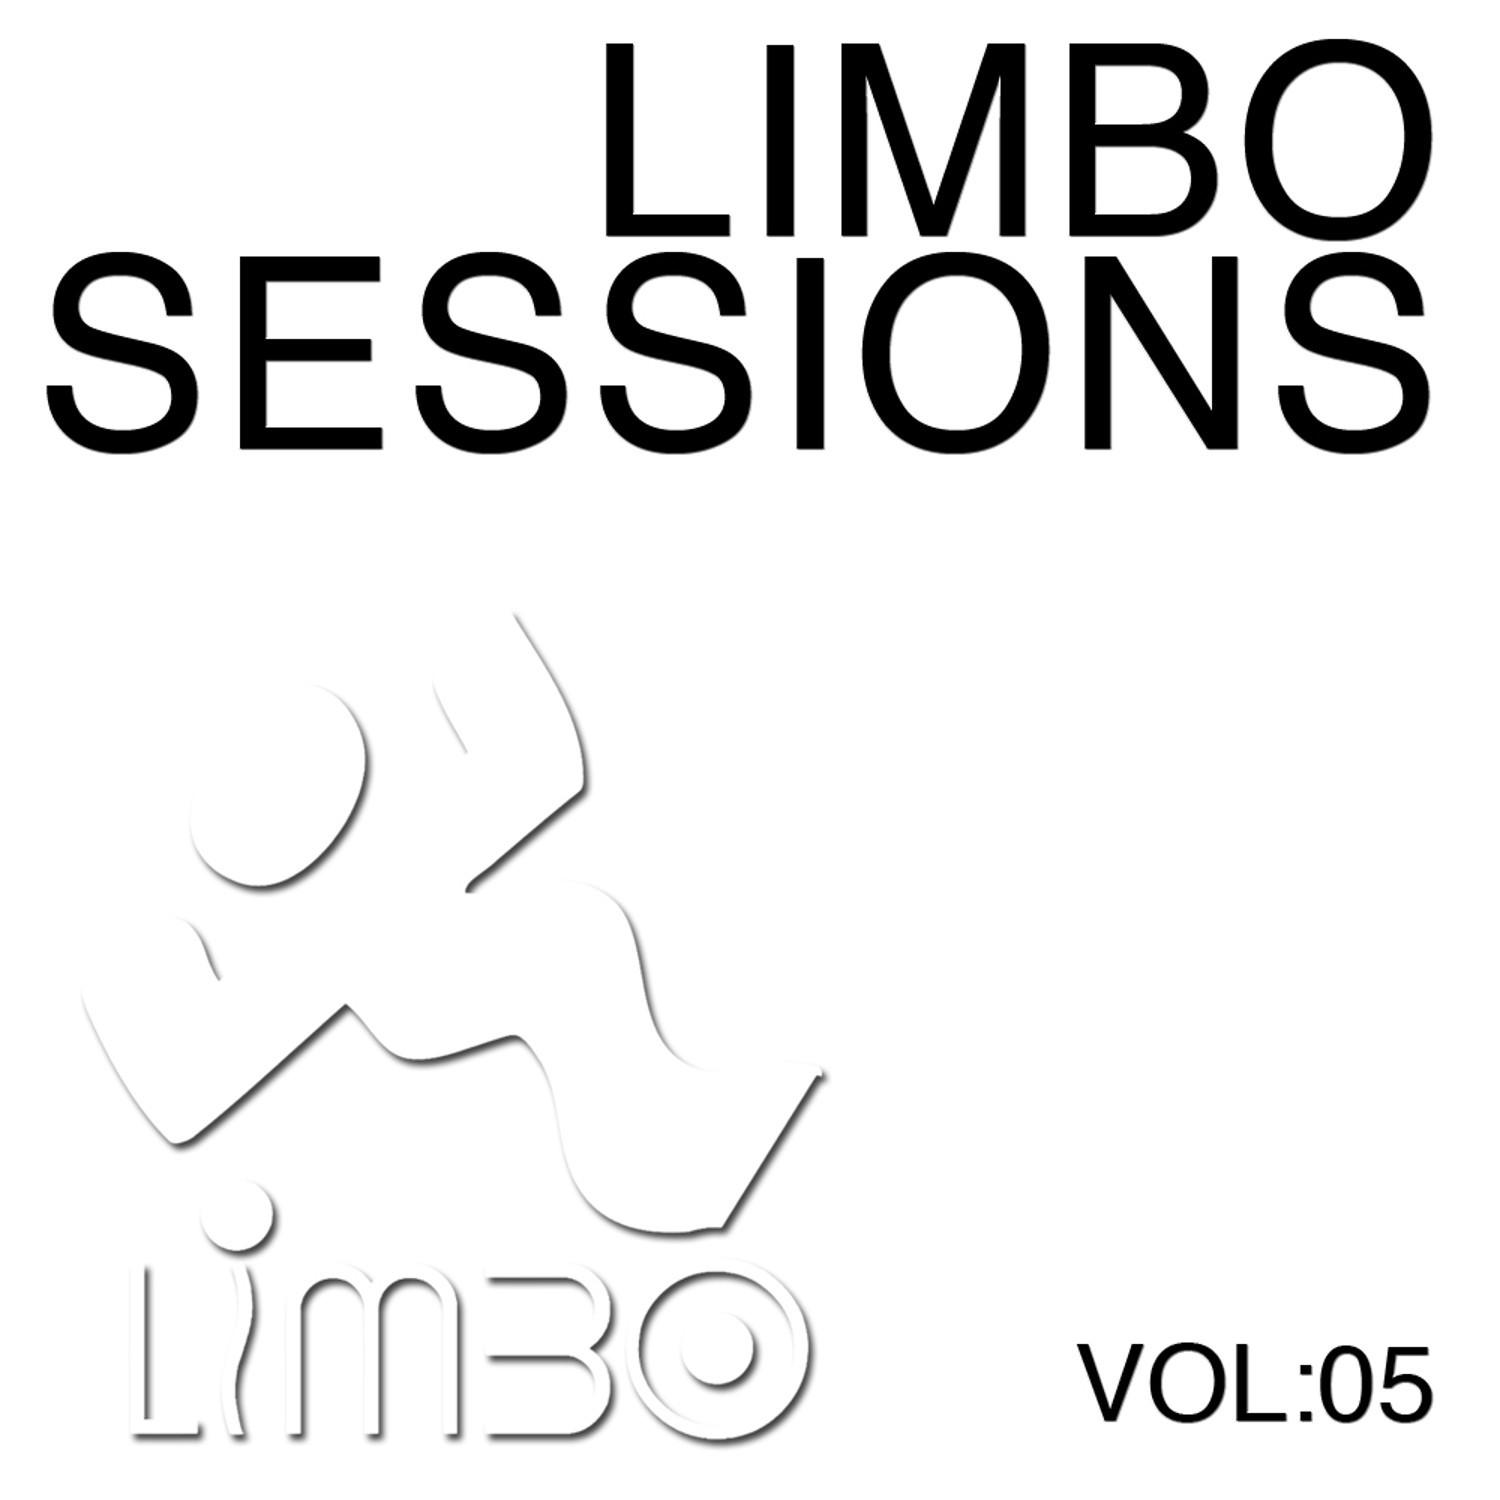 LIMBO SESSIONS, Vol. 05